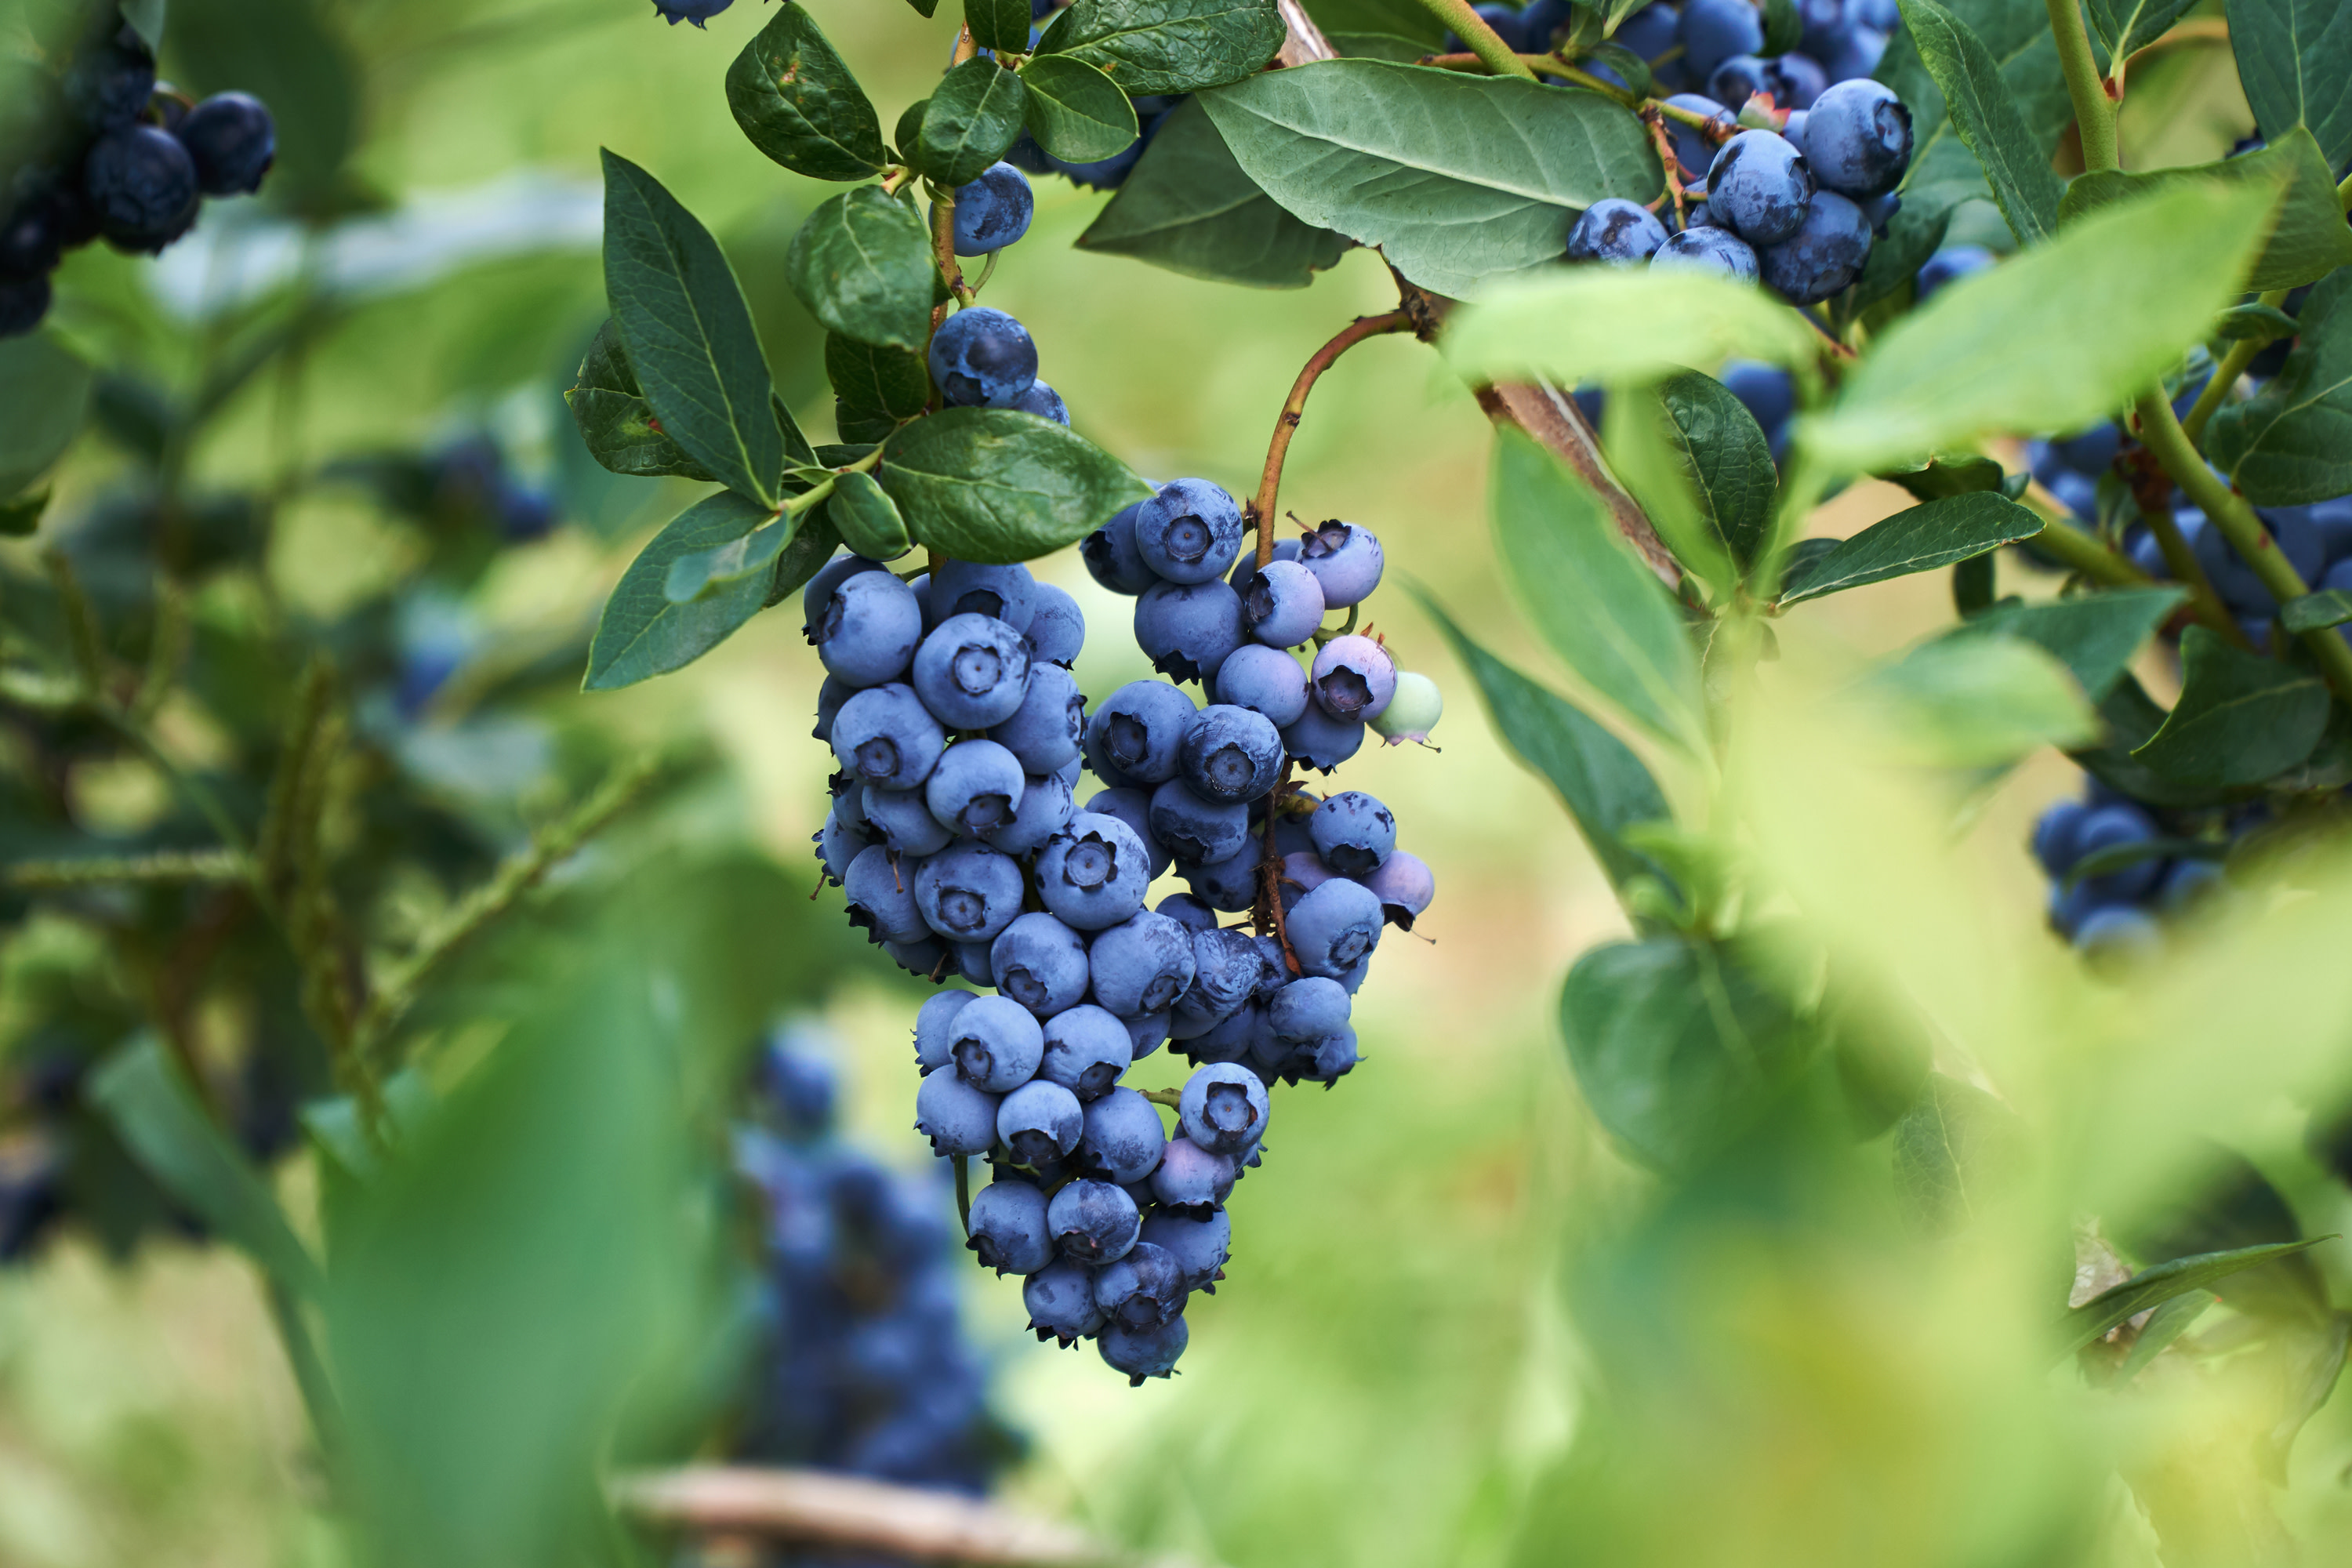 How Do Blueberries Grow?